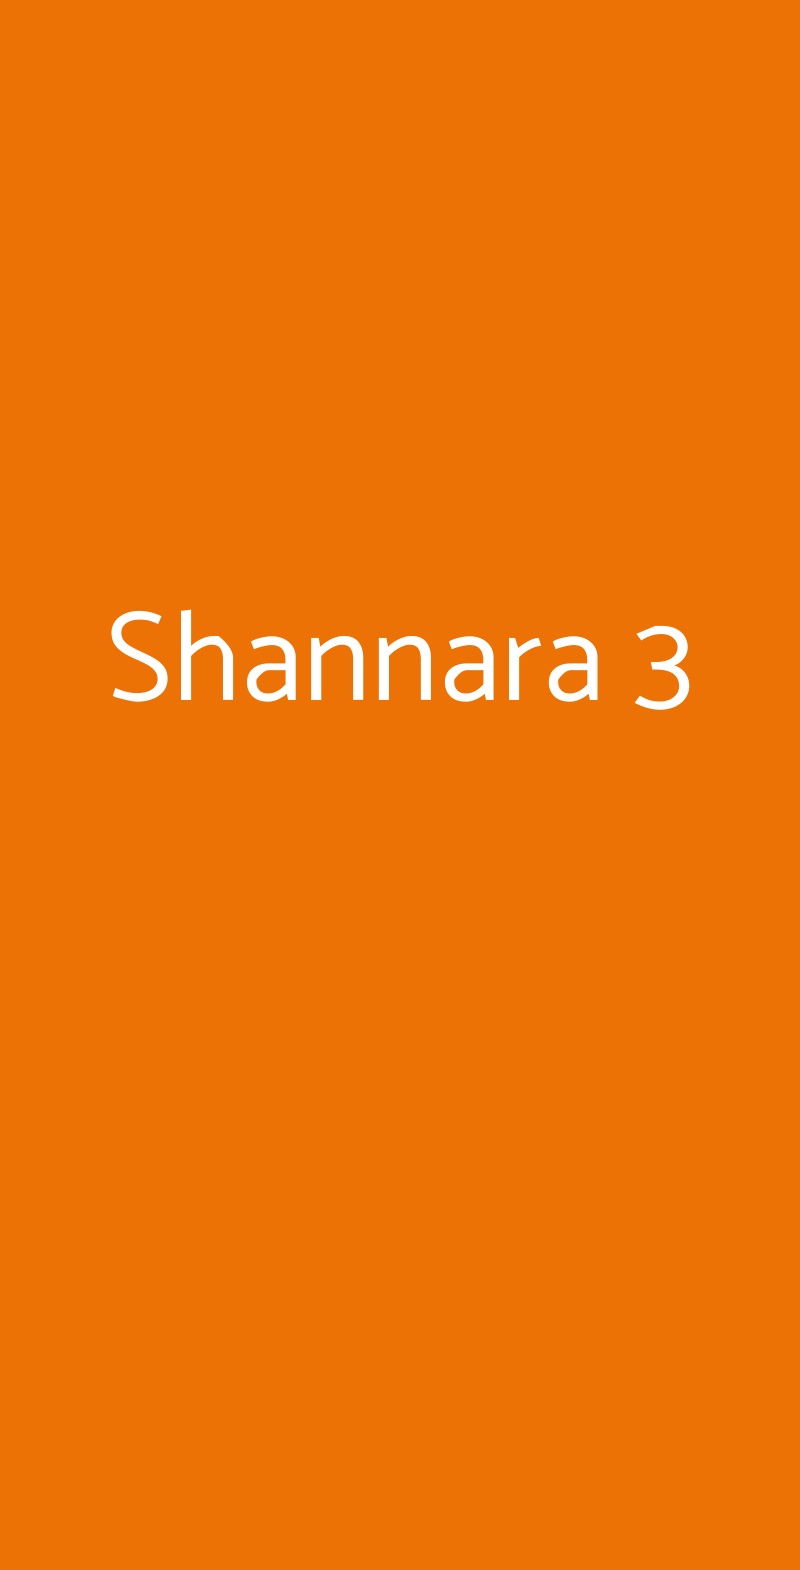 Shannara 3 Milano menù 1 pagina